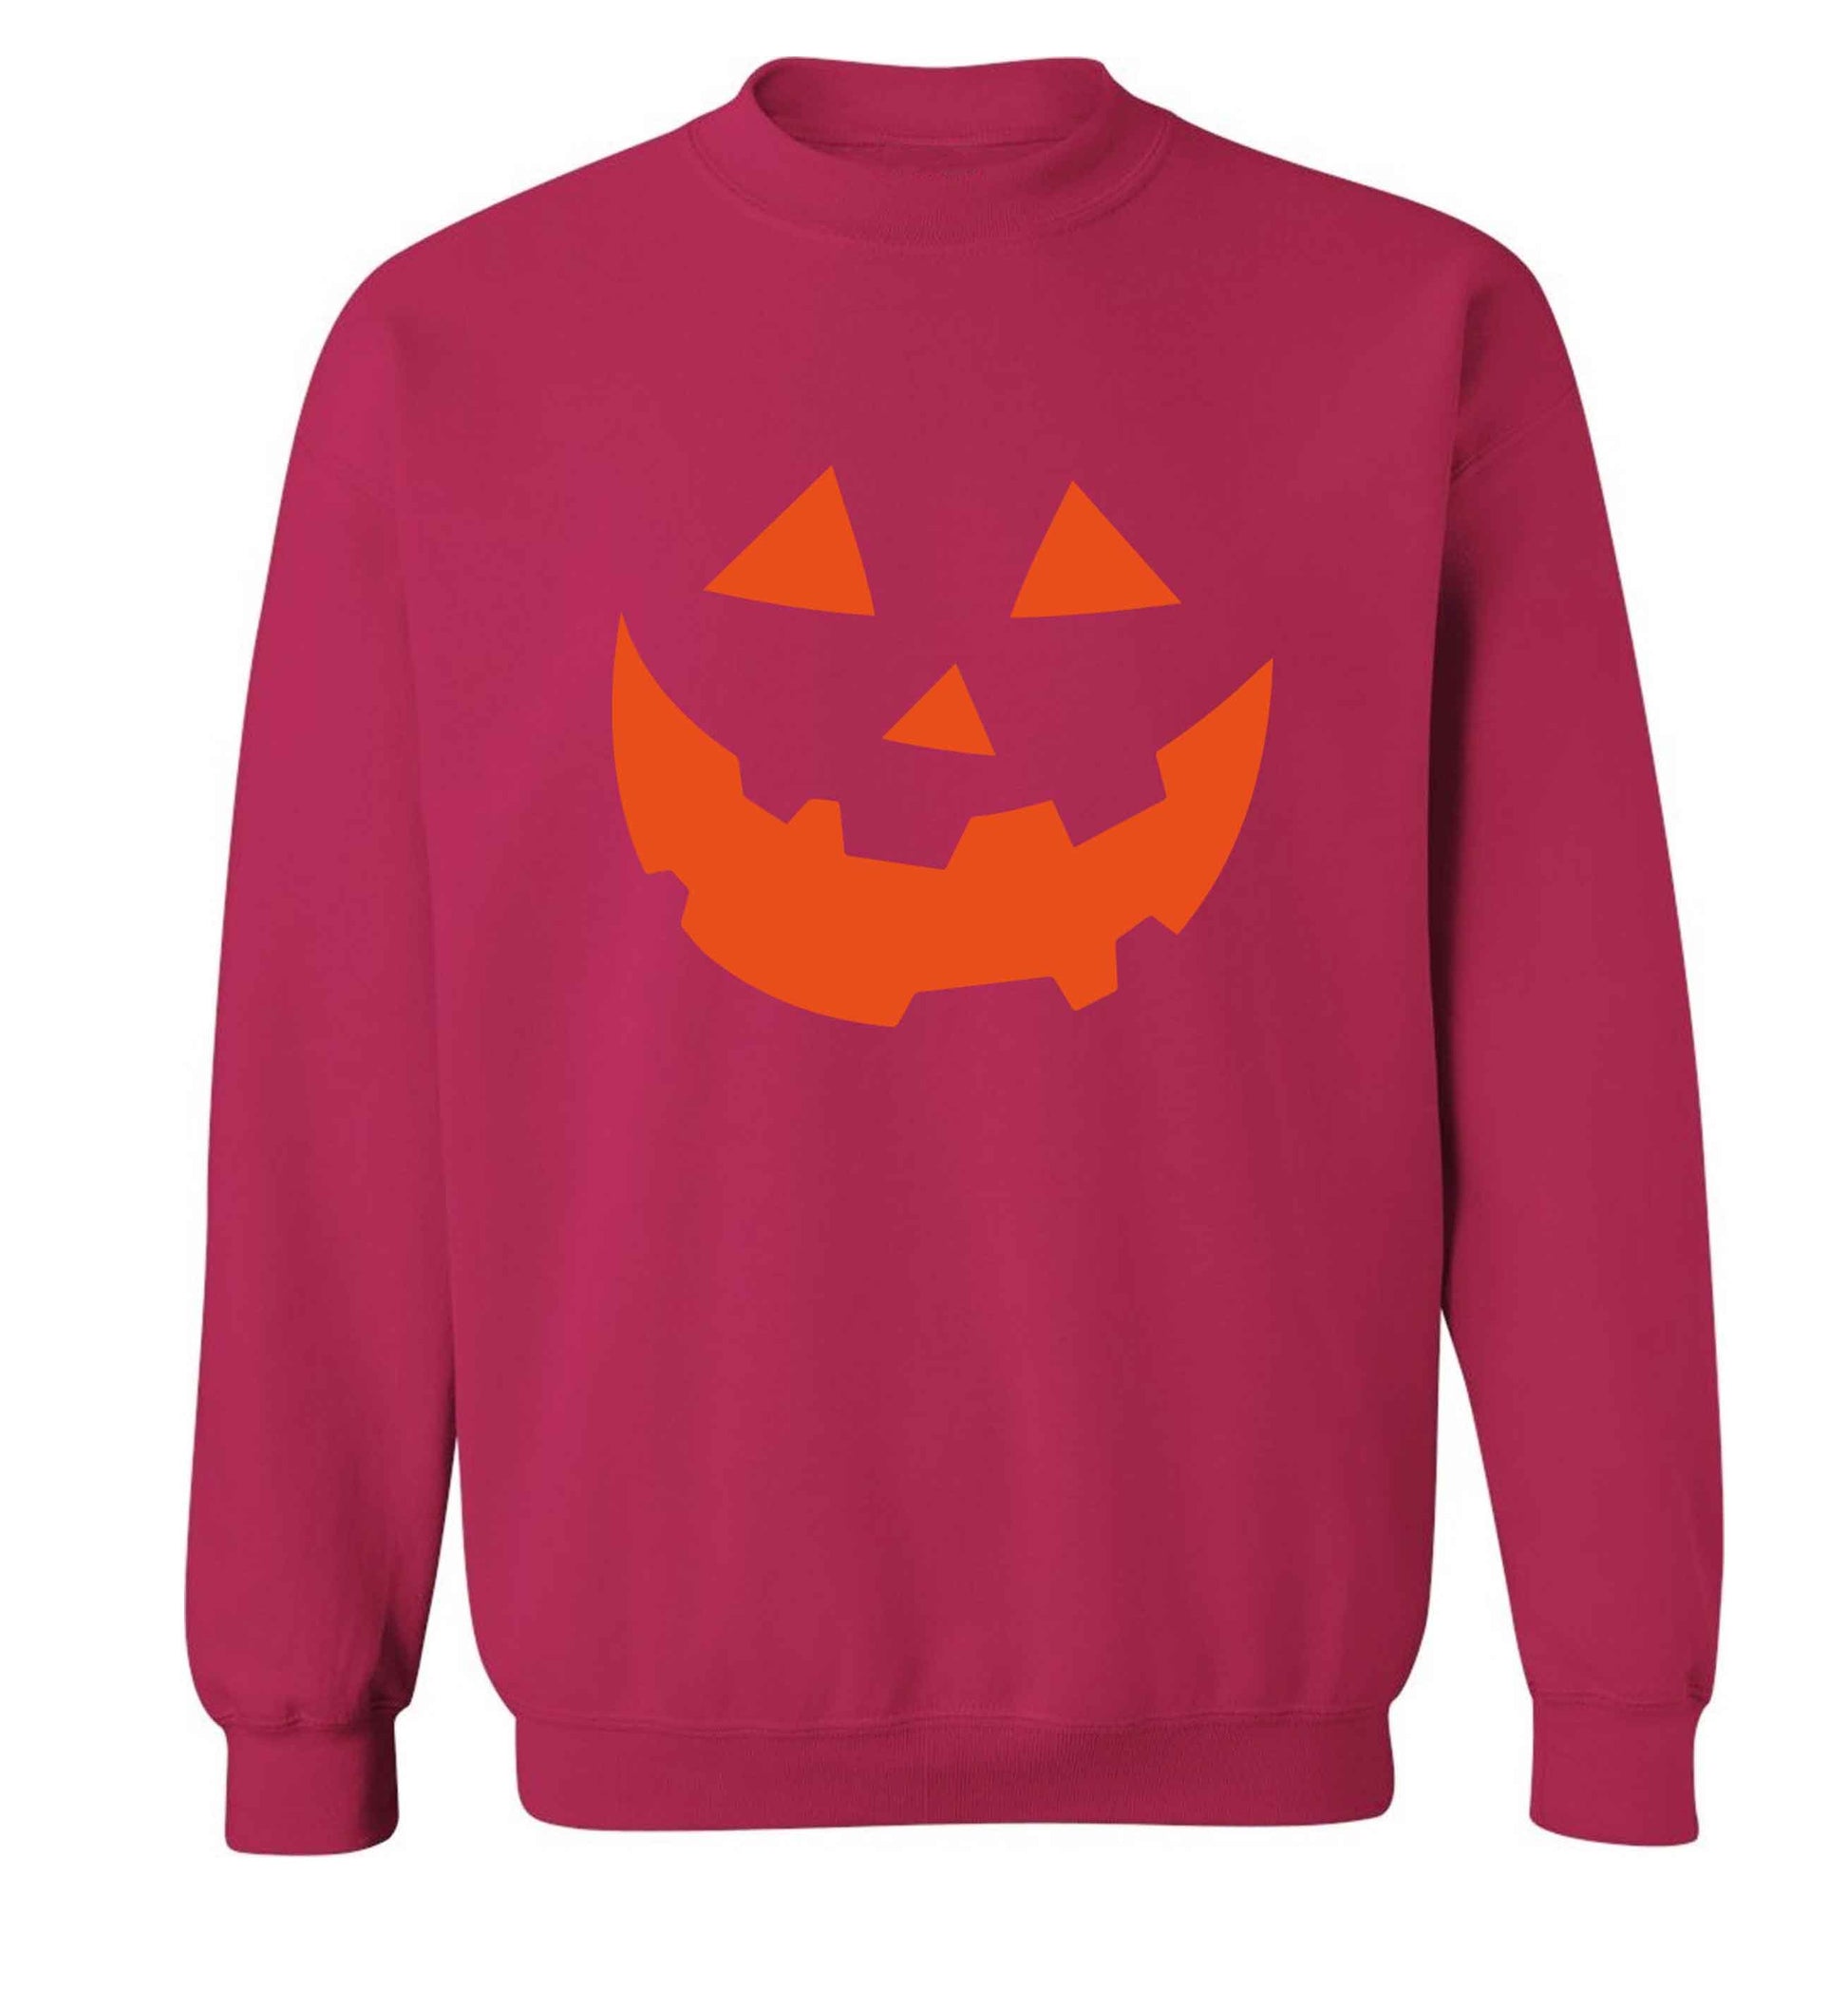 Pumpkin Spice Nice adult's unisex pink sweater 2XL